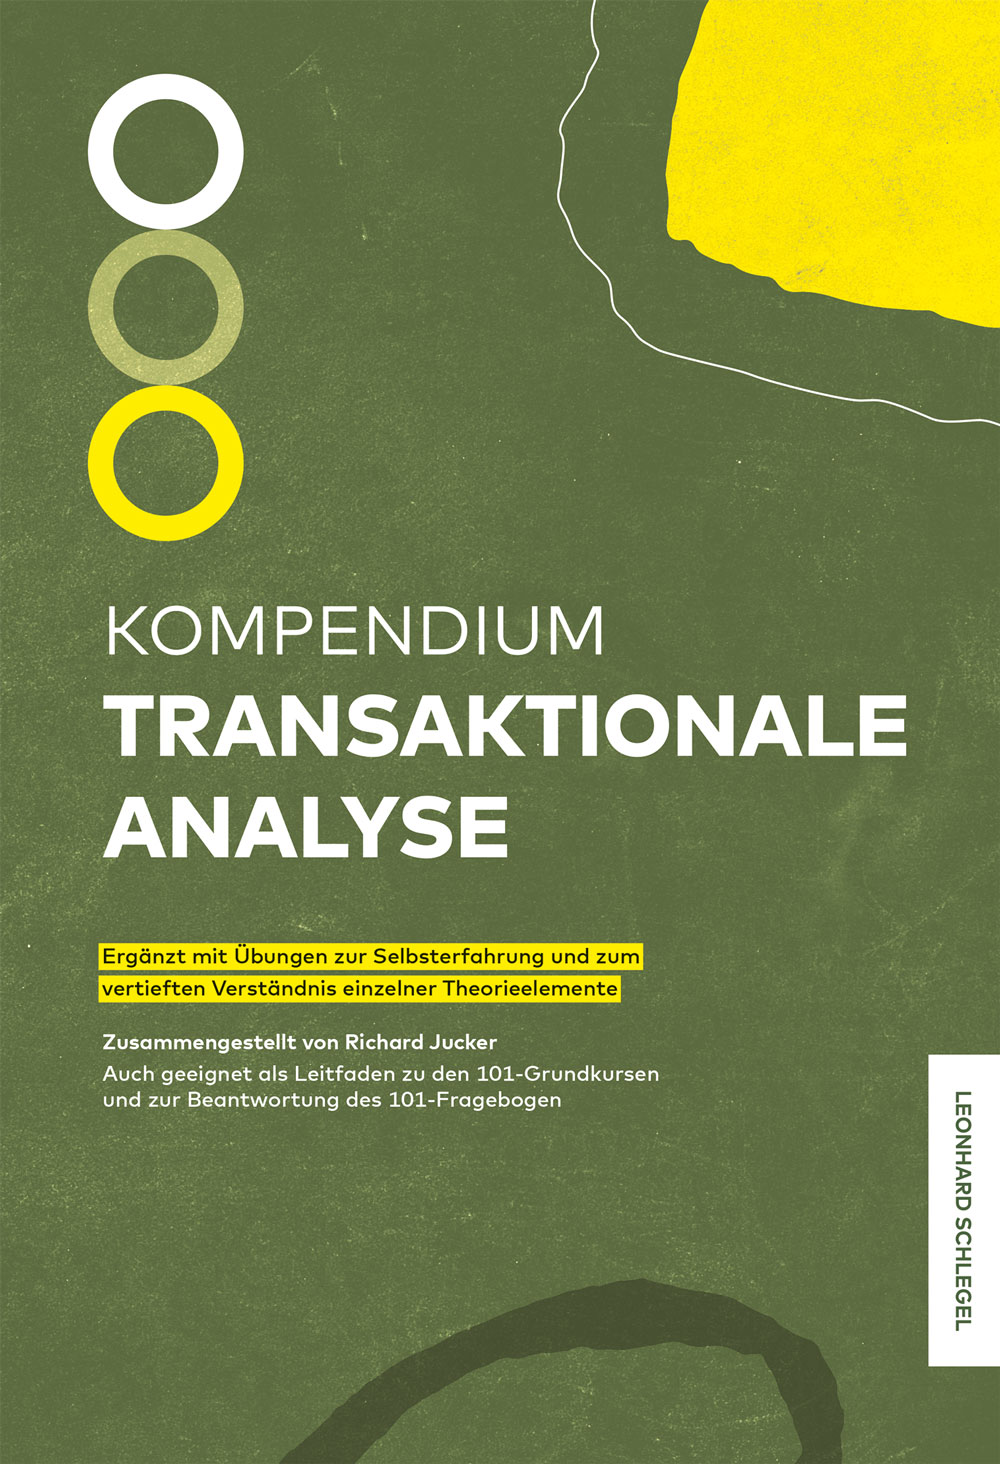 Kompendium Transaktionale Analyse